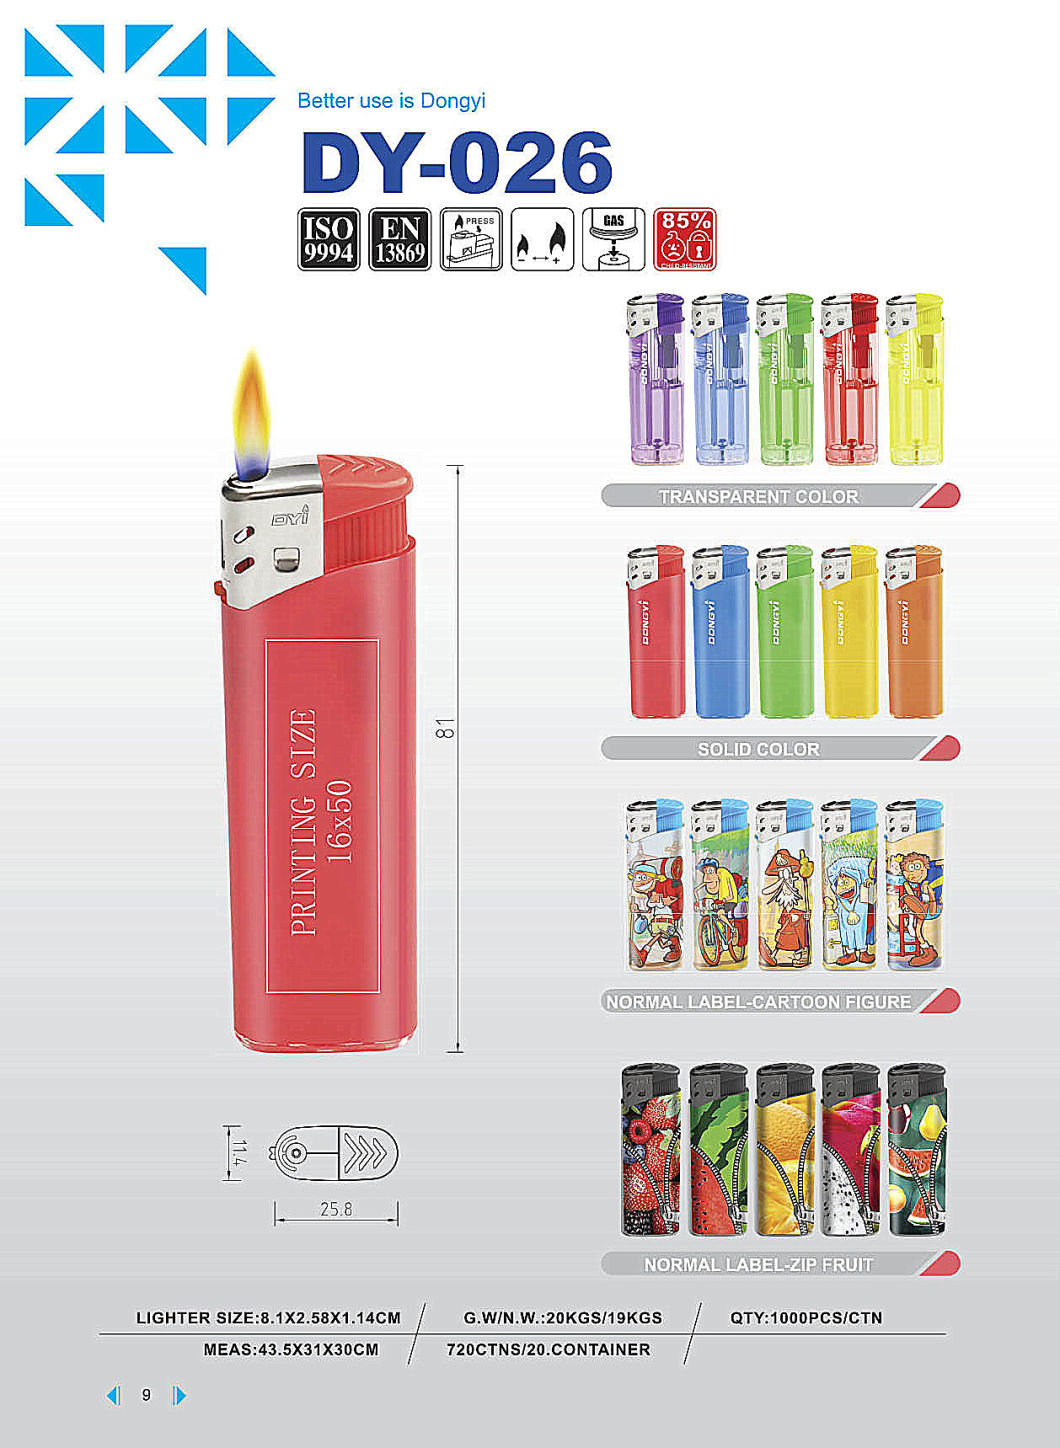 EUR Classic Fashion High Quality Hot Sale Electric Gas Lighter Dy-026 Huan Dongyi Lighter